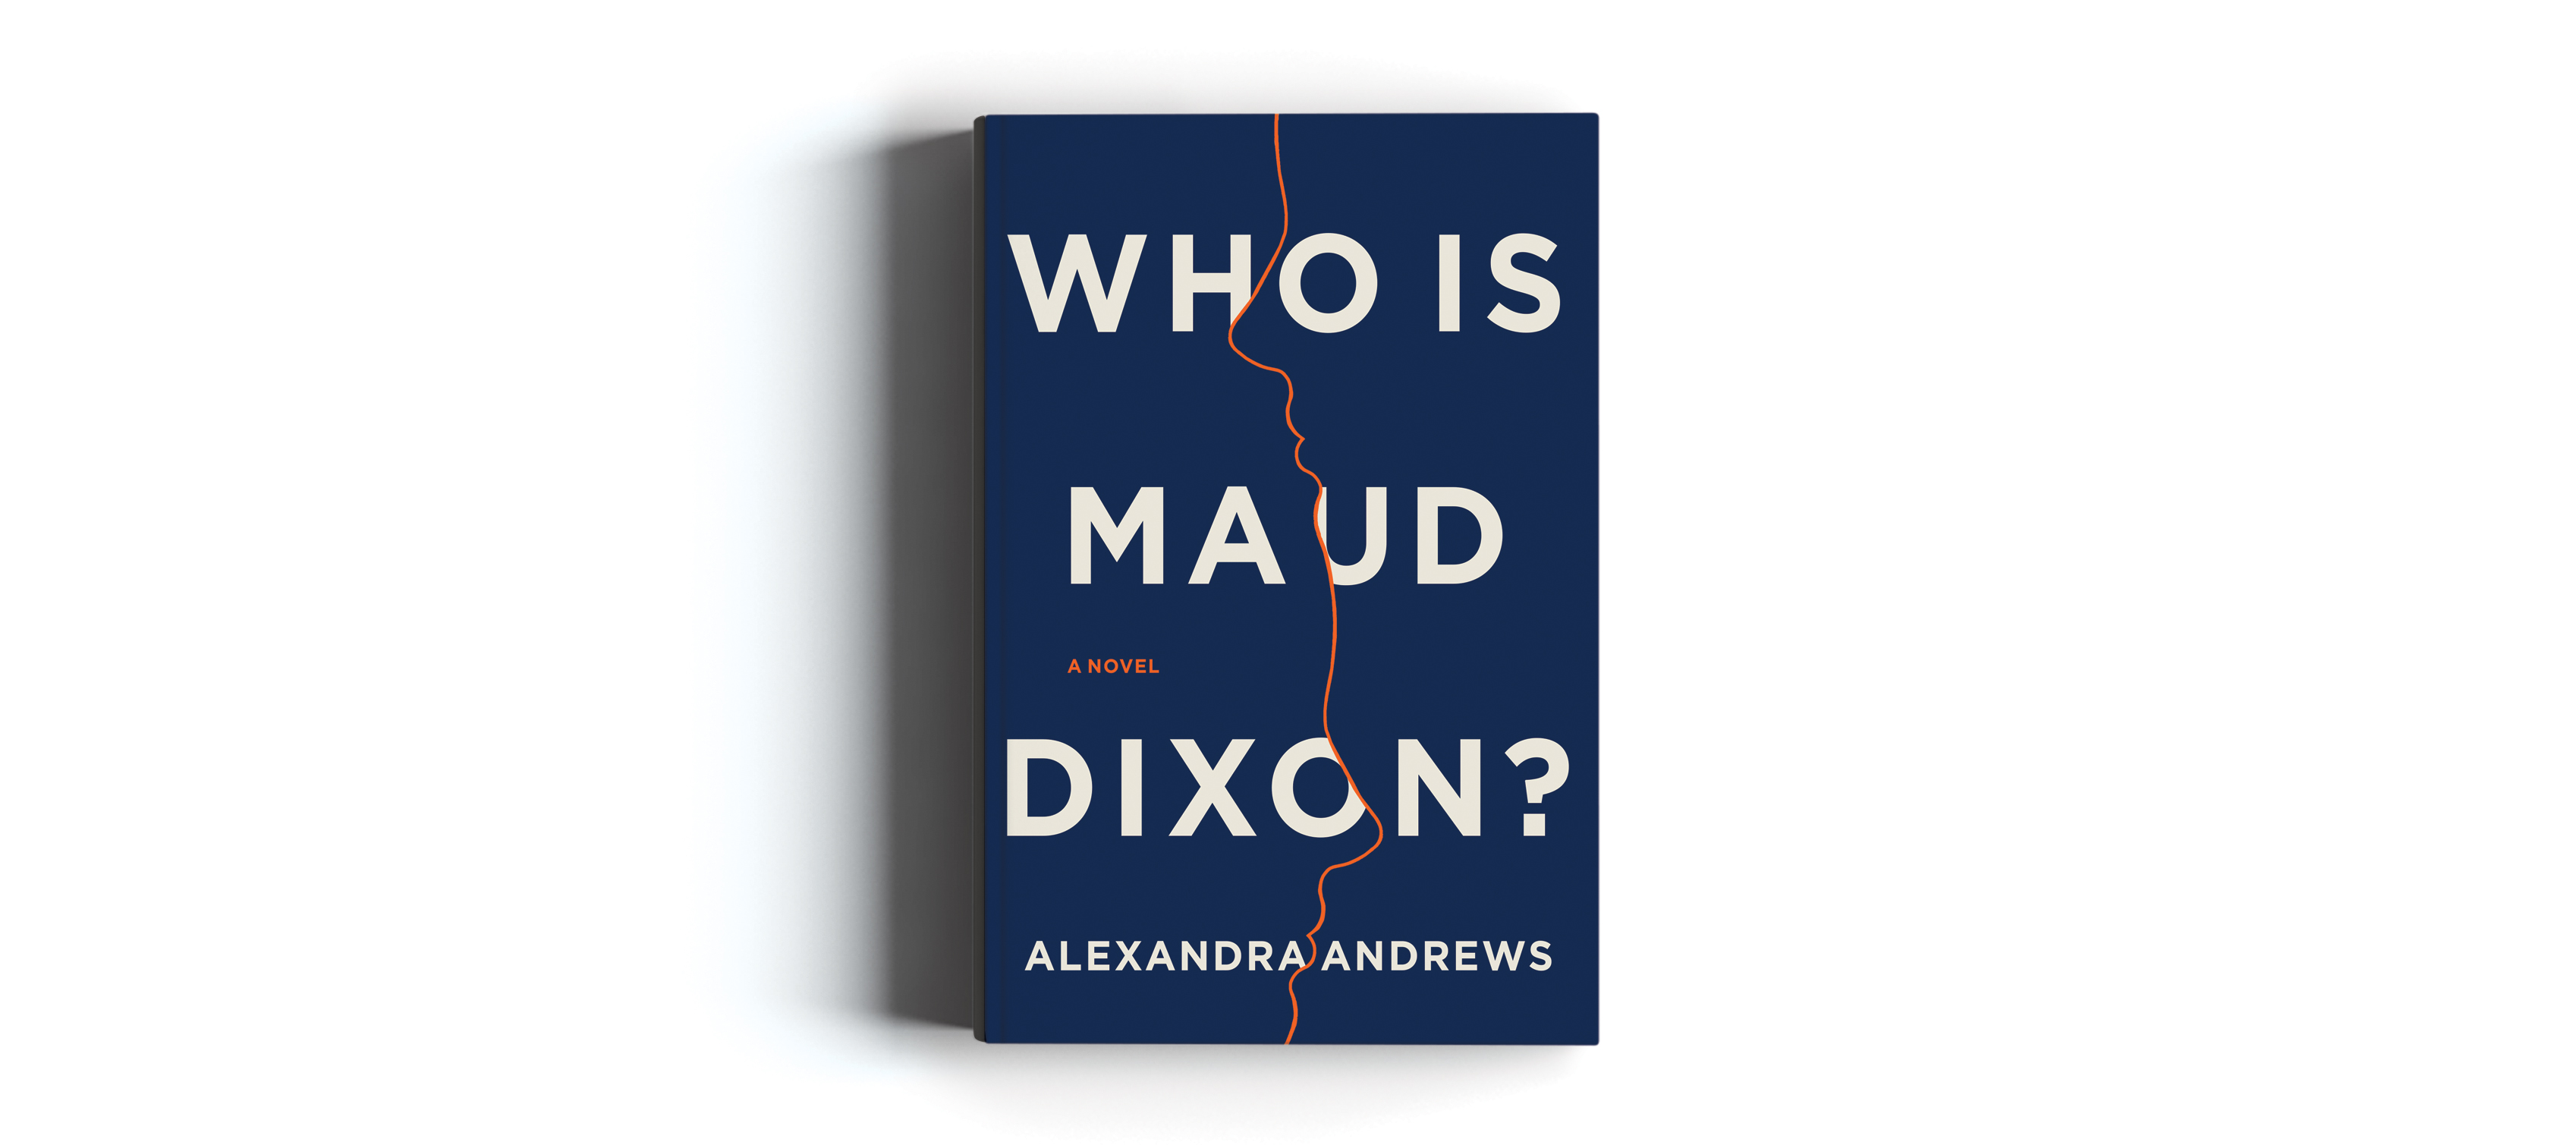 who is maud dixon book